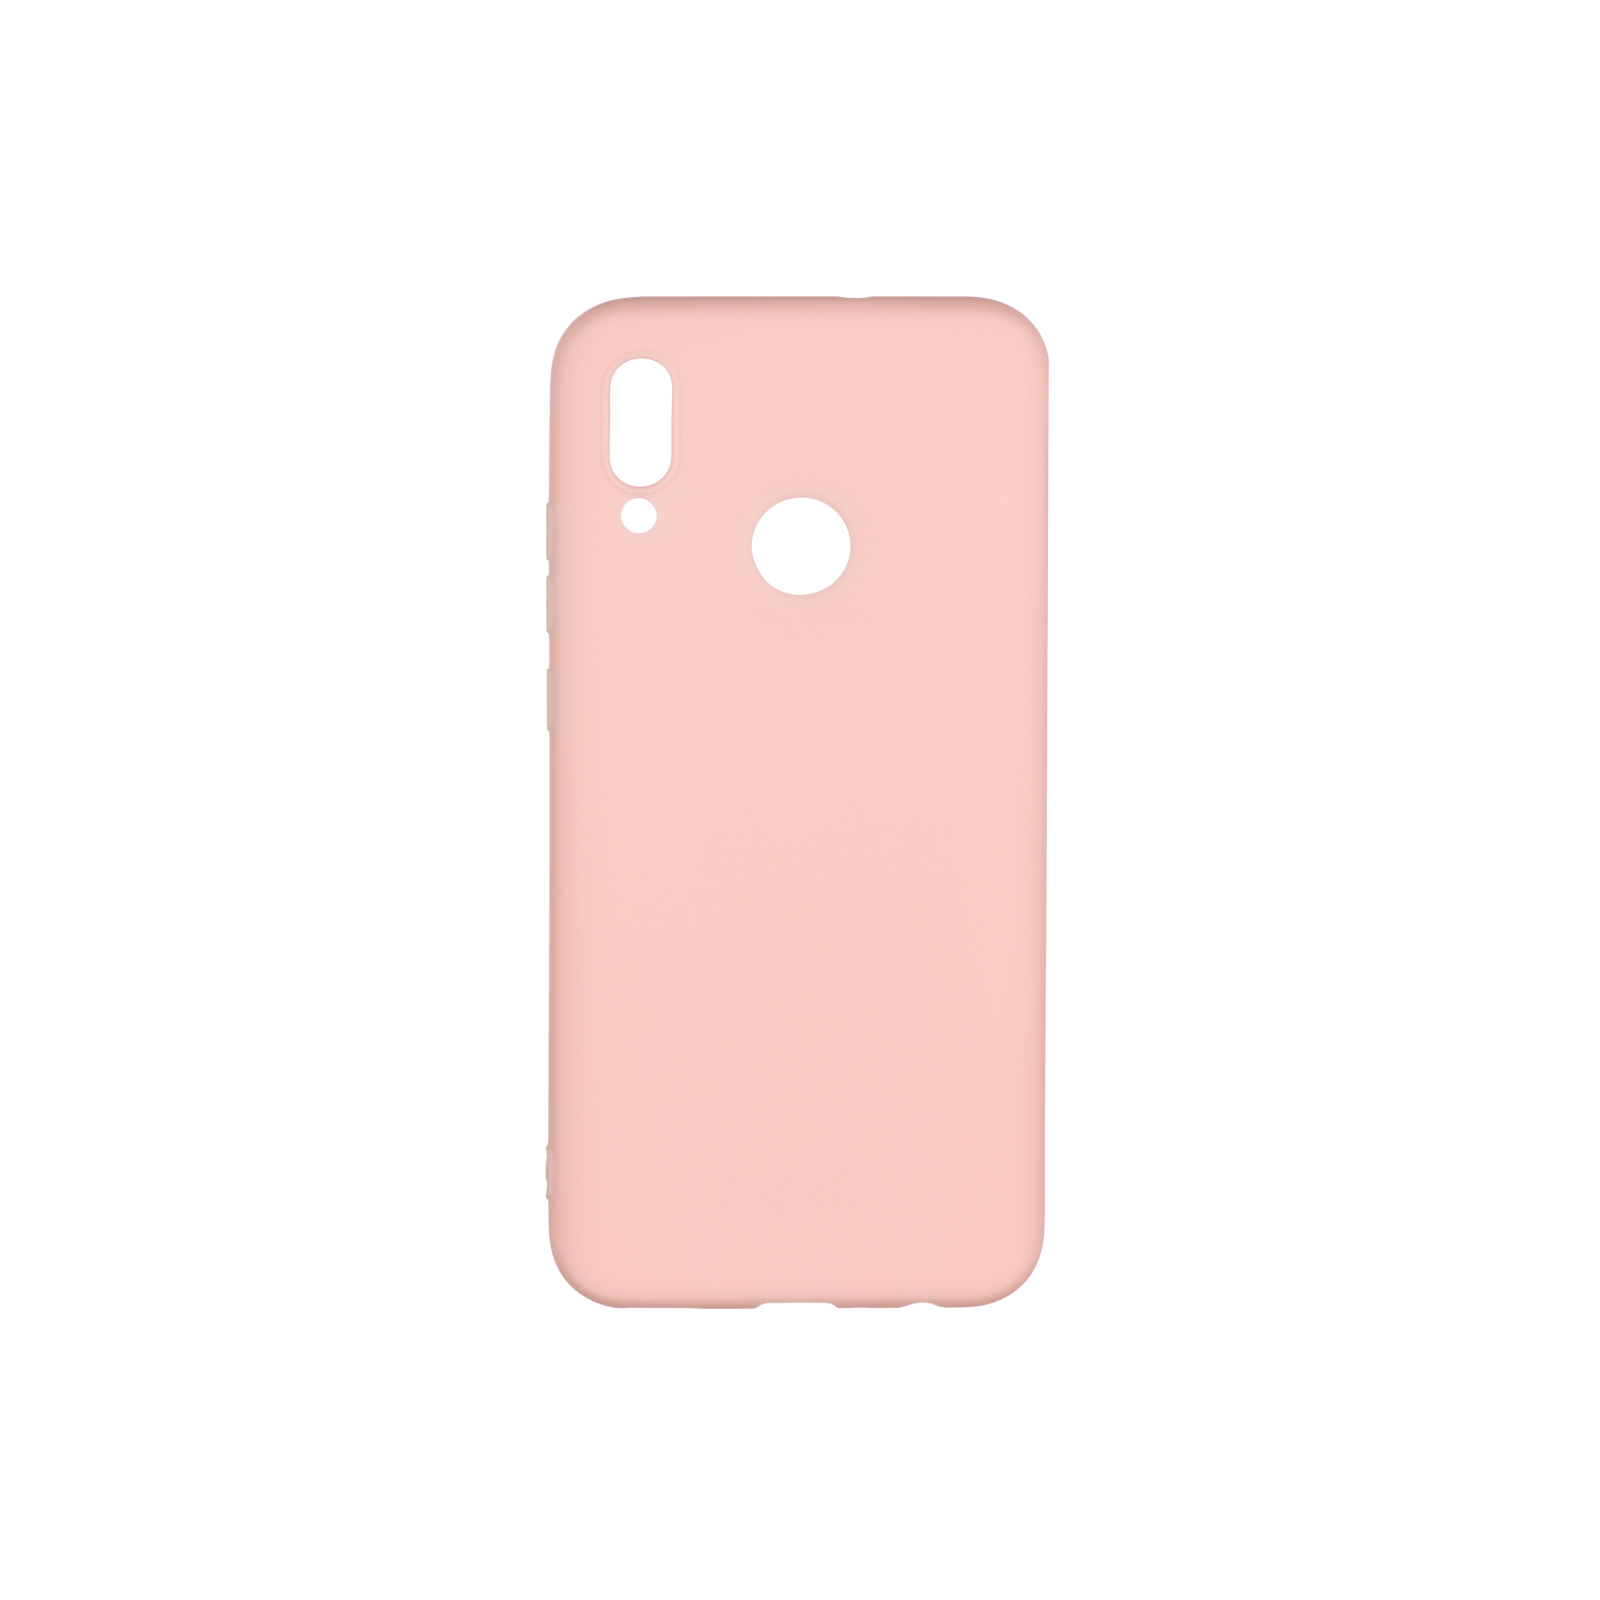 Чехол для мобильного телефона 2E Huawei P Smart 2019, Soft touch, Baby pink (2E-H-PS-19-AOST-BP)